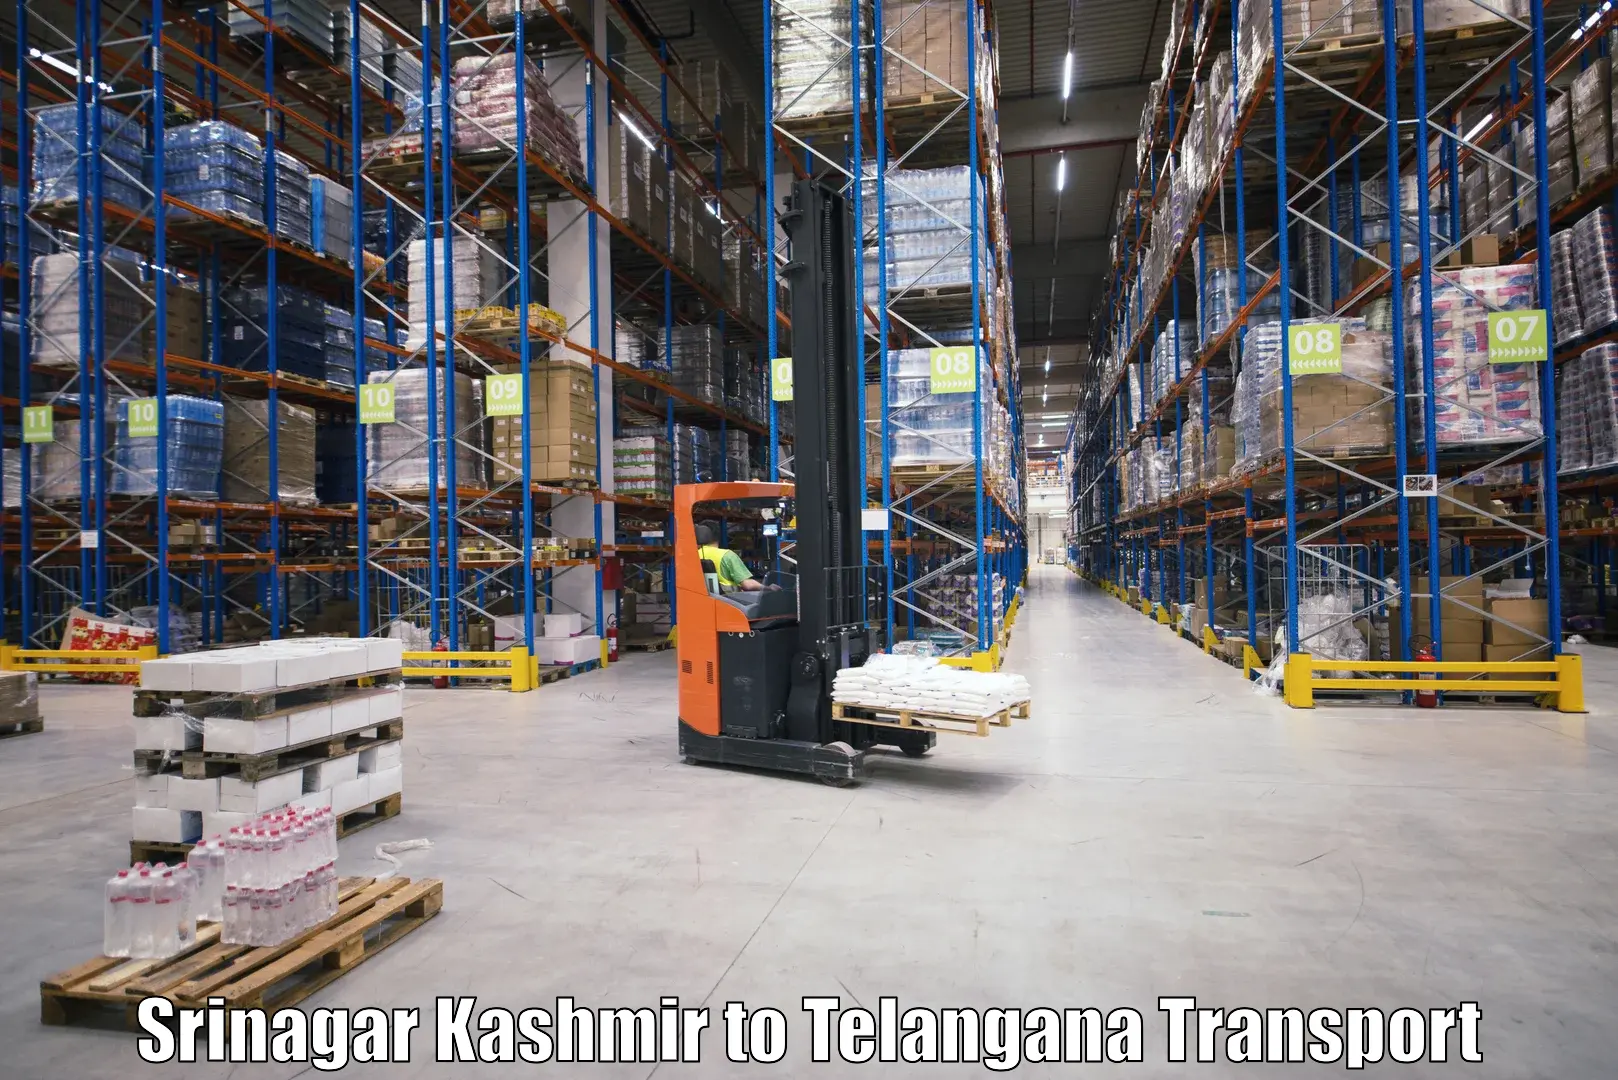 Goods delivery service Srinagar Kashmir to Jannaram